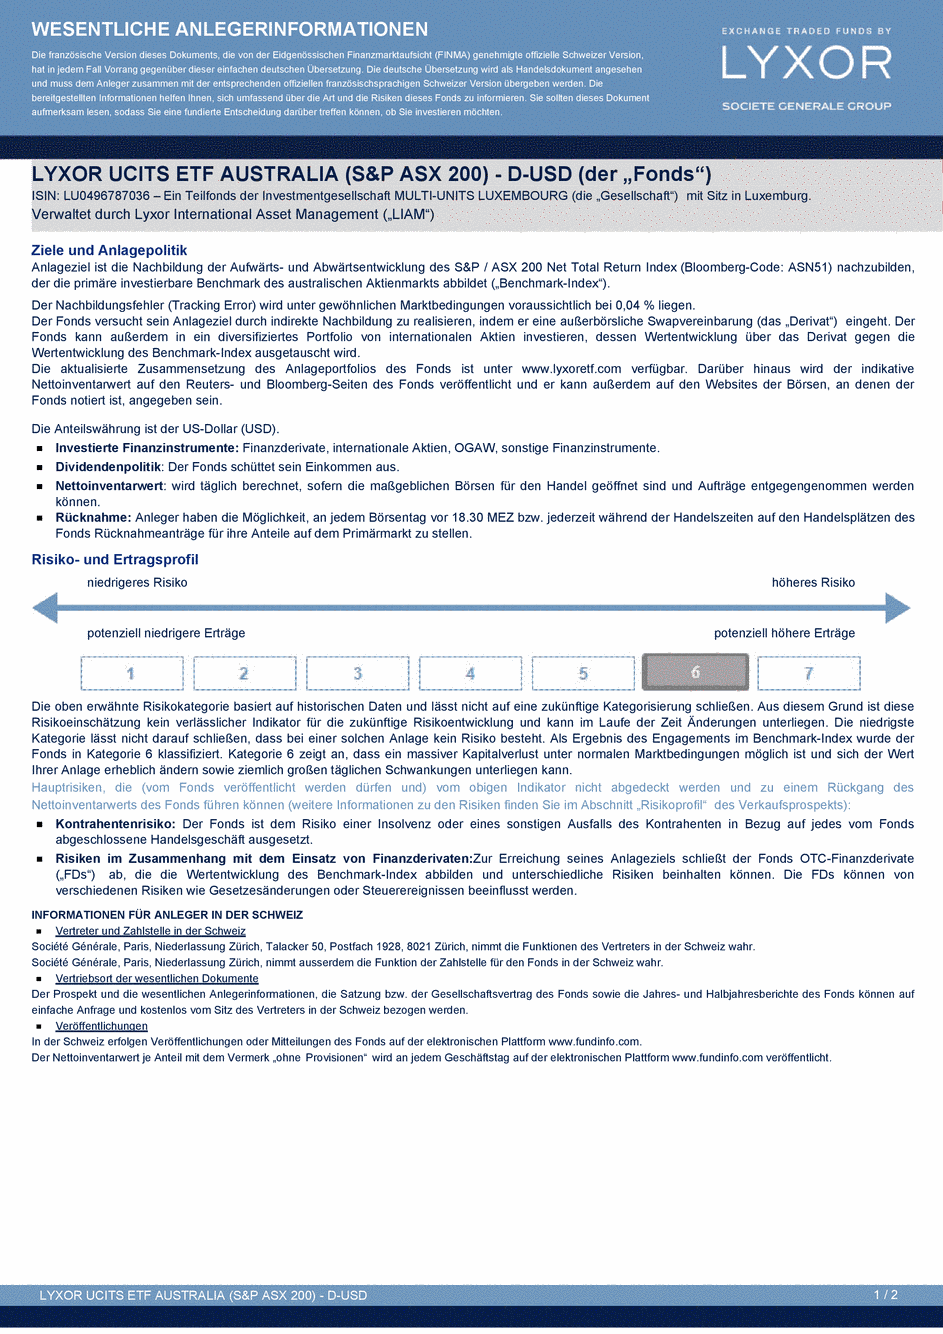 DICI Lyxor Australia (S&P/ASX 200) UCITS ETF - D-USD - 16/07/2014 - Allemand